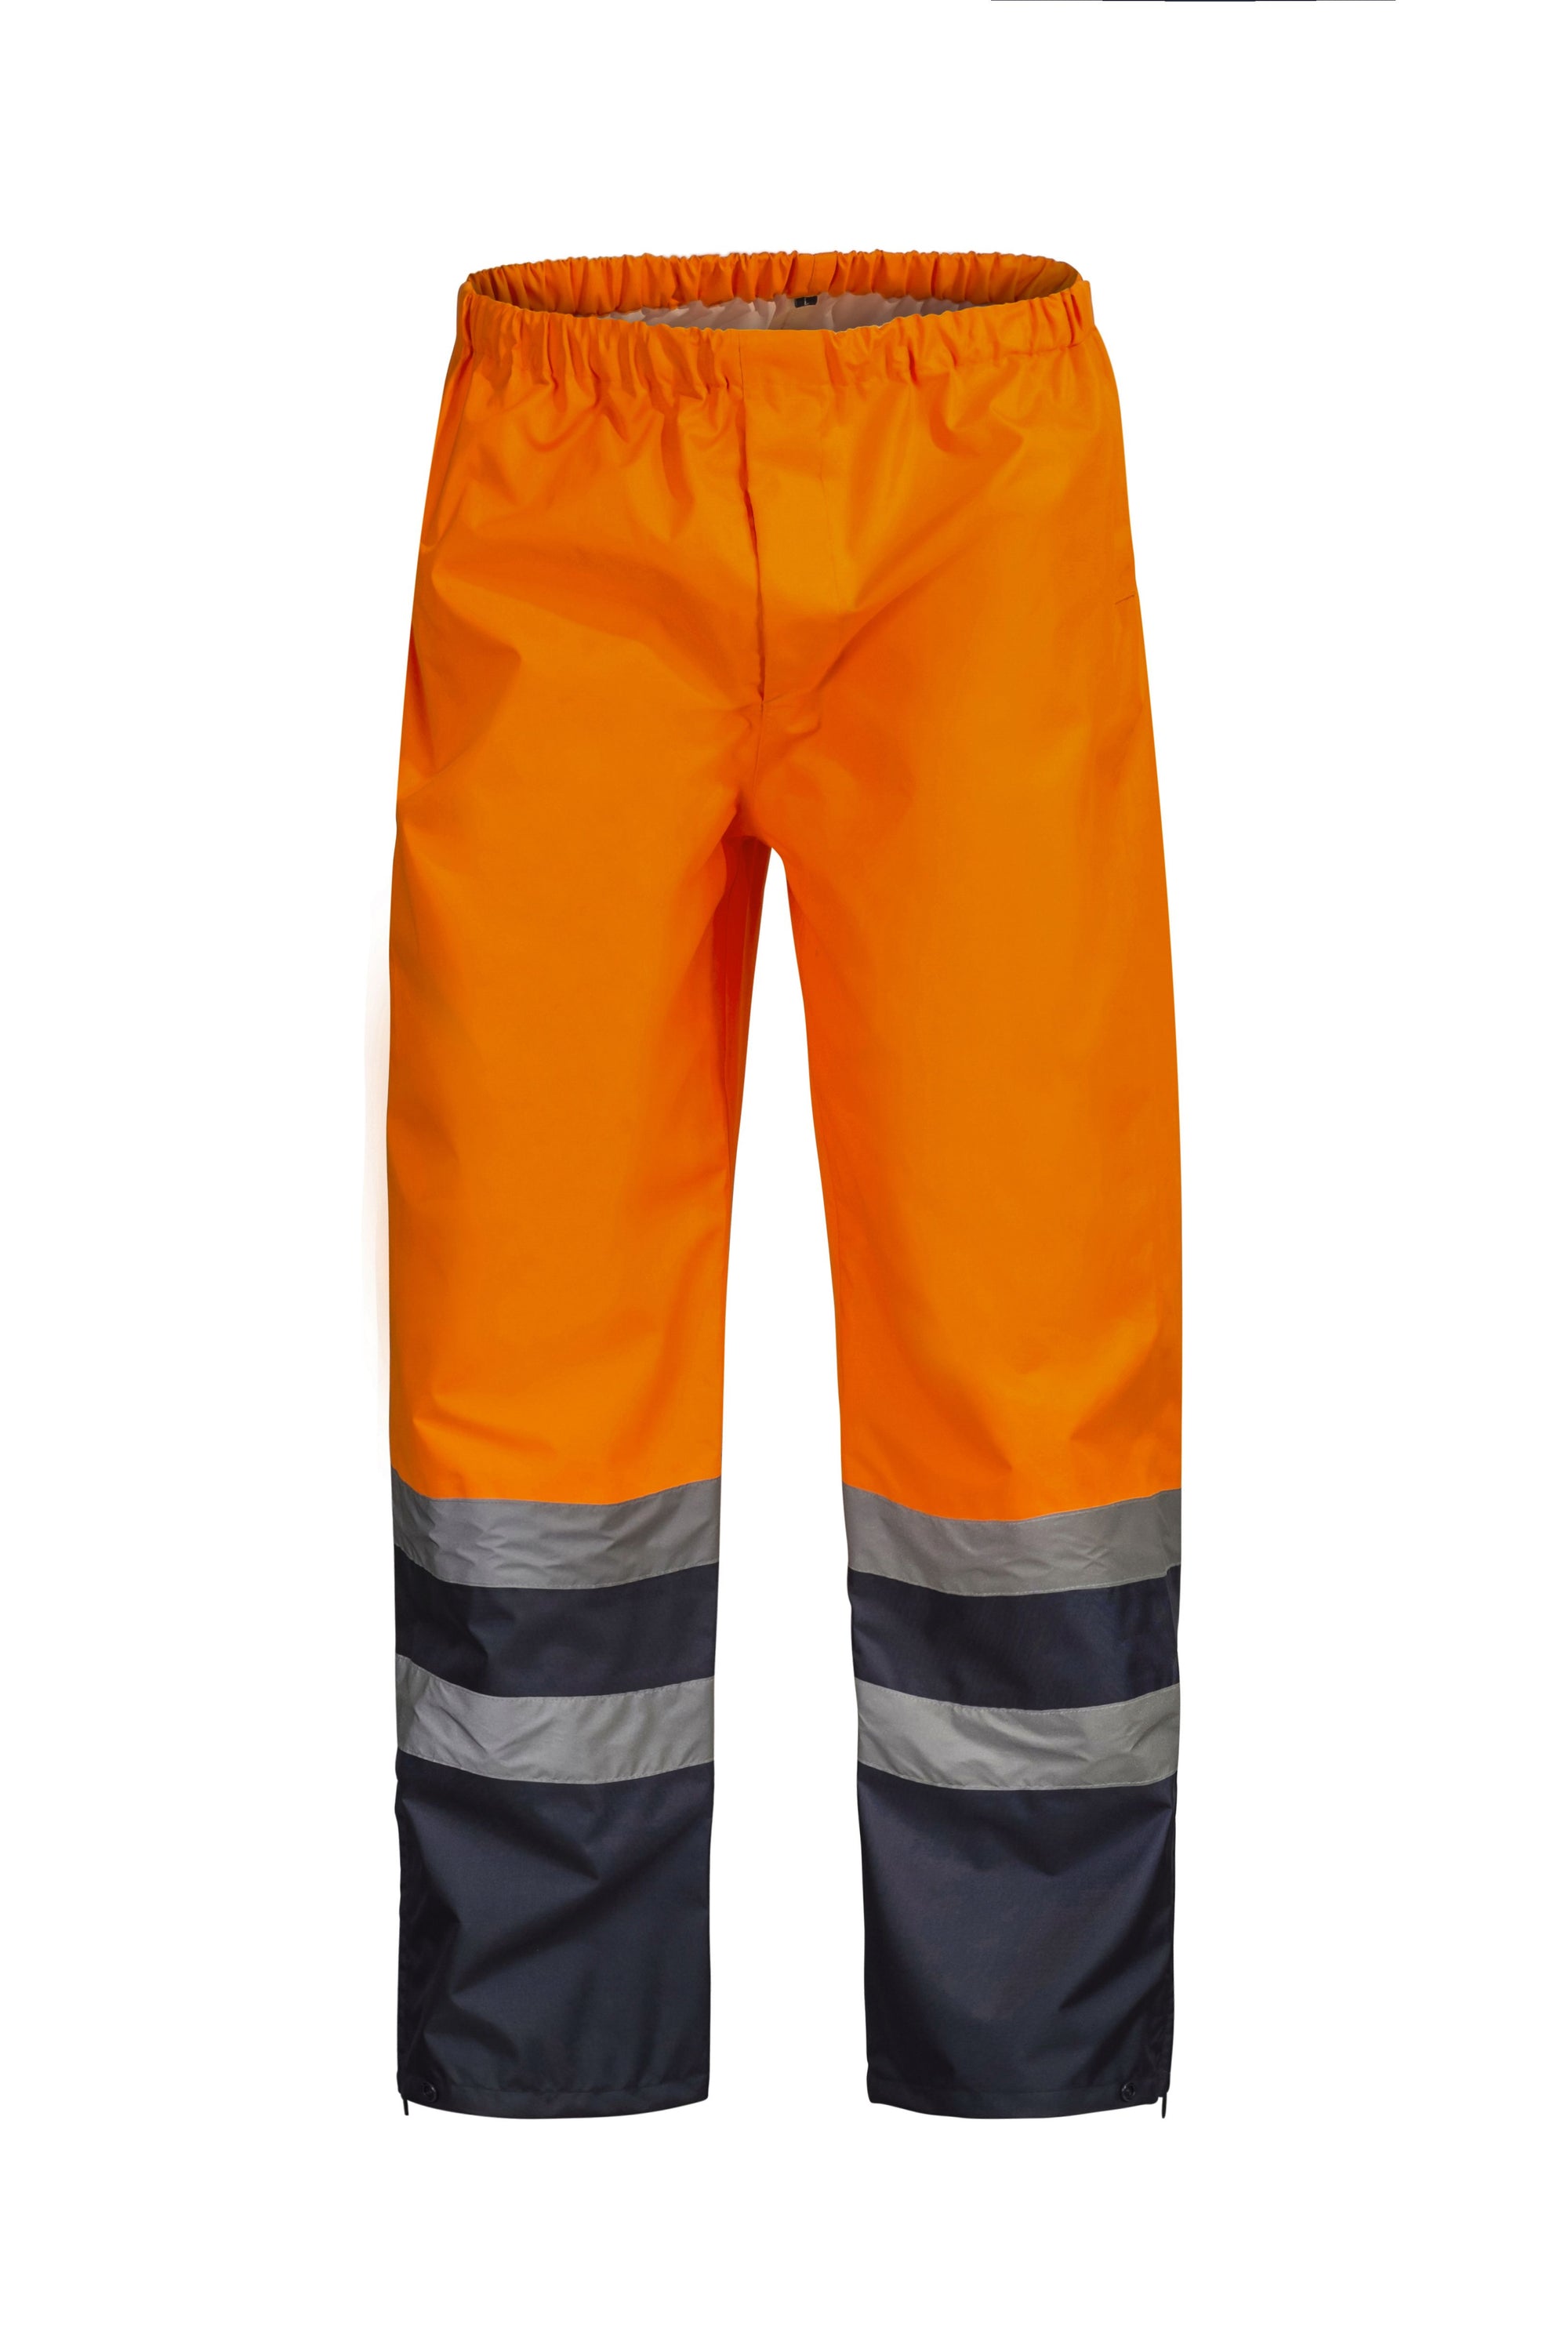 WorkCraft Mens bm-Taped Rain Pants 300D Orange/Navy M